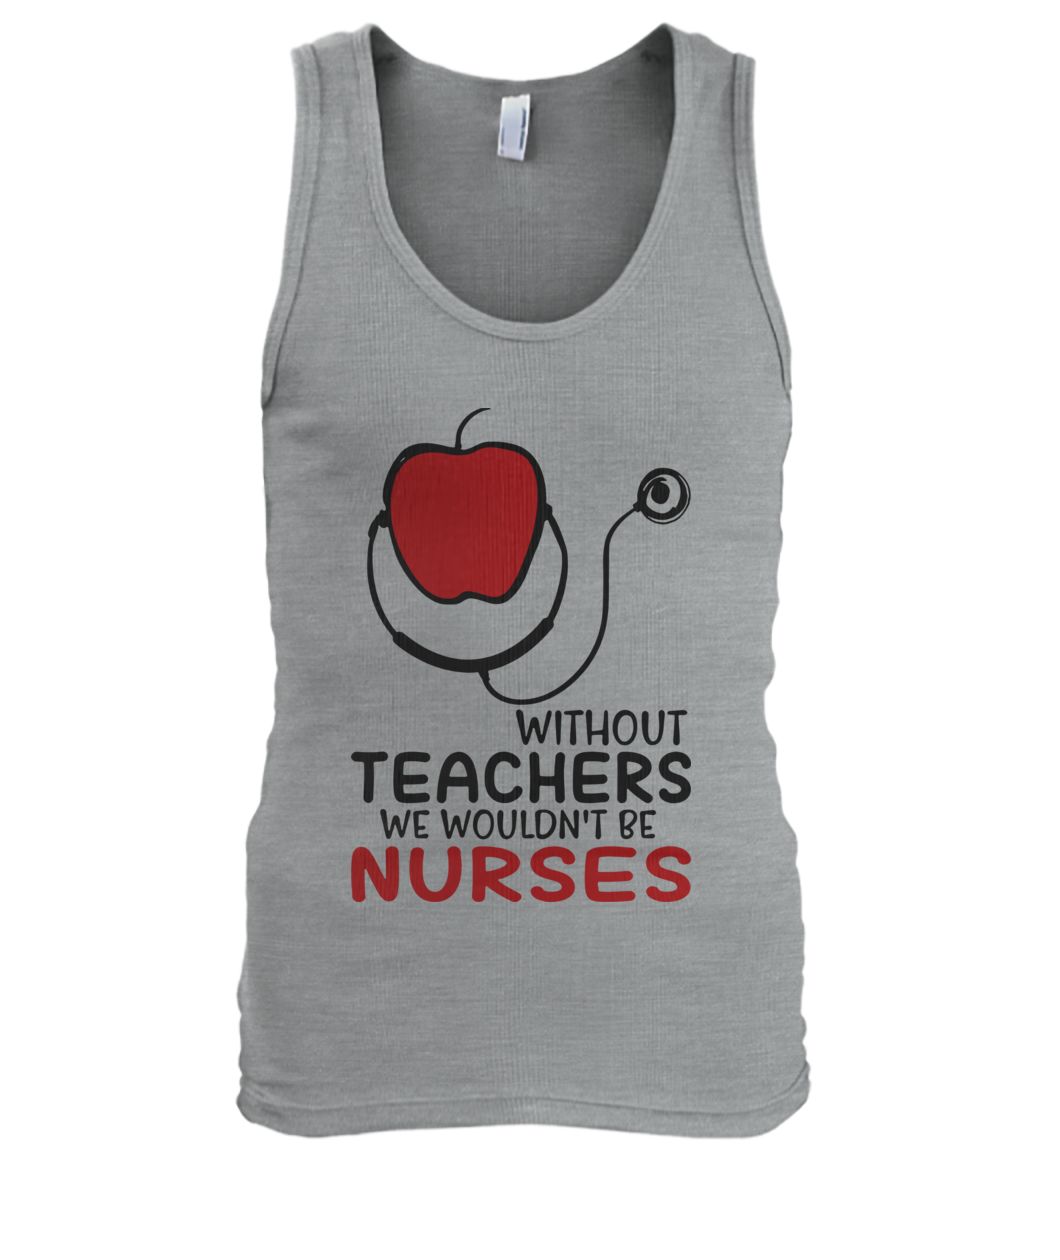 Without teachers we wouldn't be nurses men's tank top